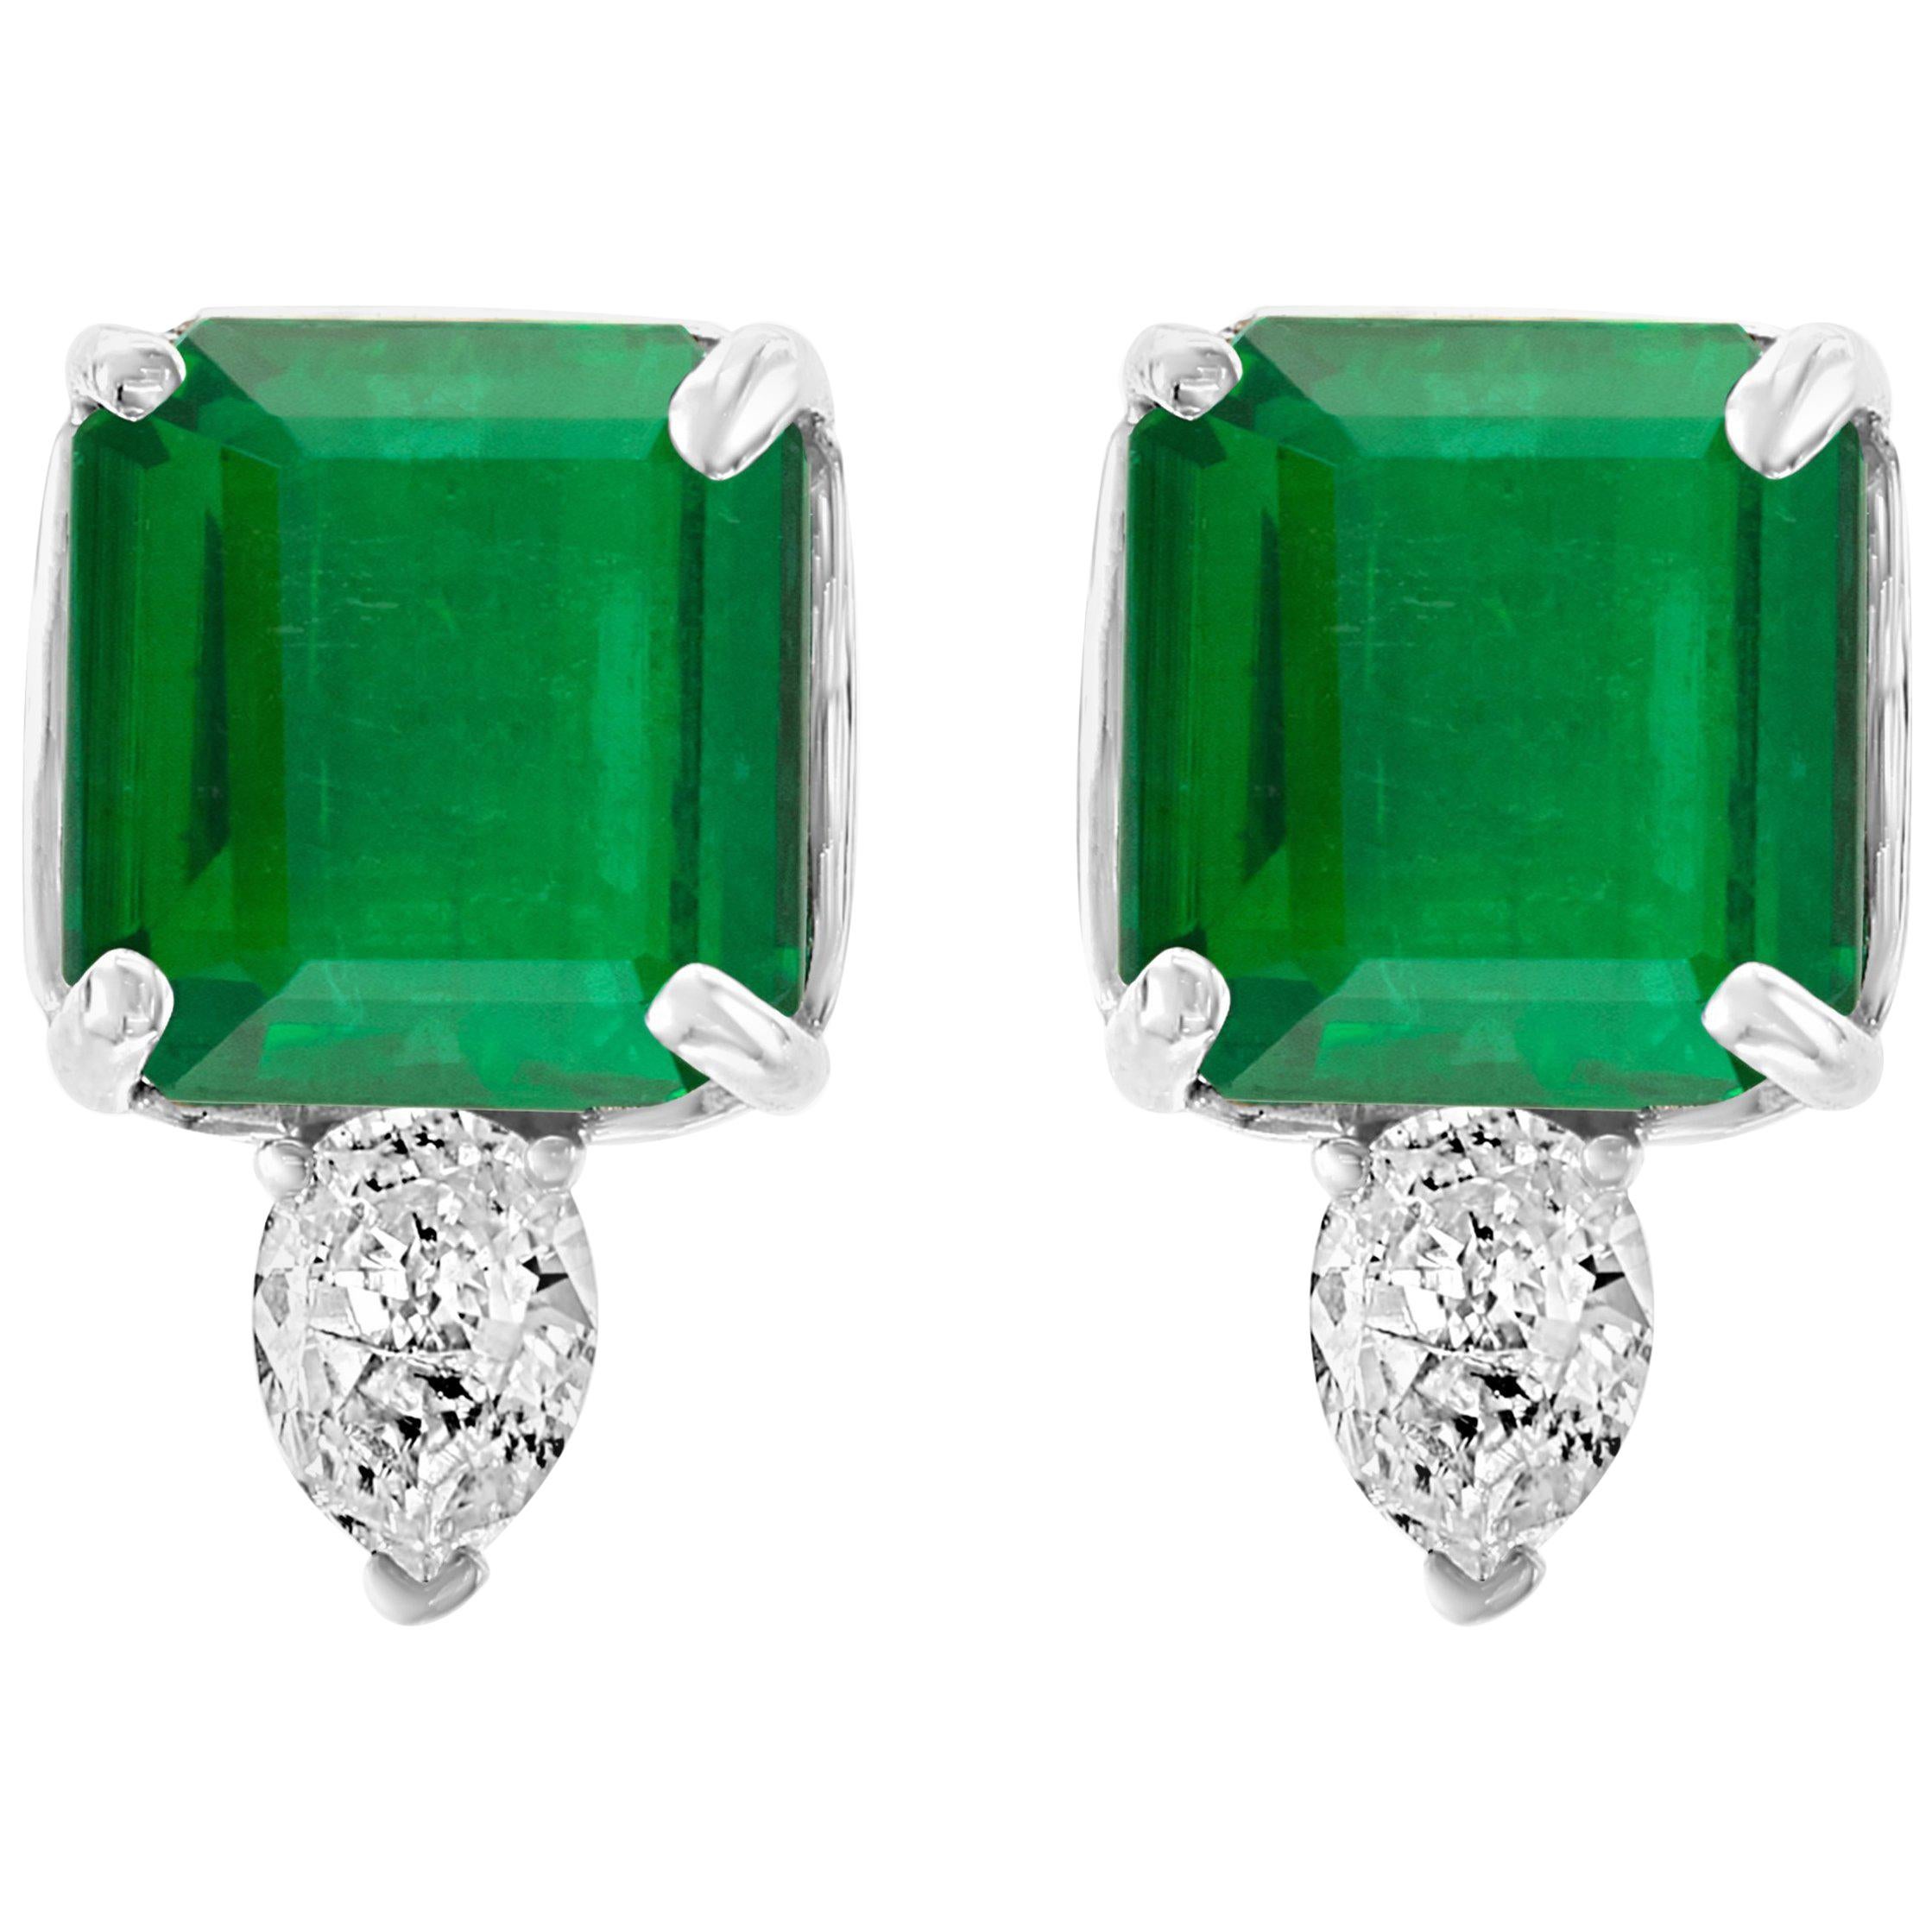 8 Carat Emerald Cut Emerald Diamond Stud Earrings 18 Karat Gold